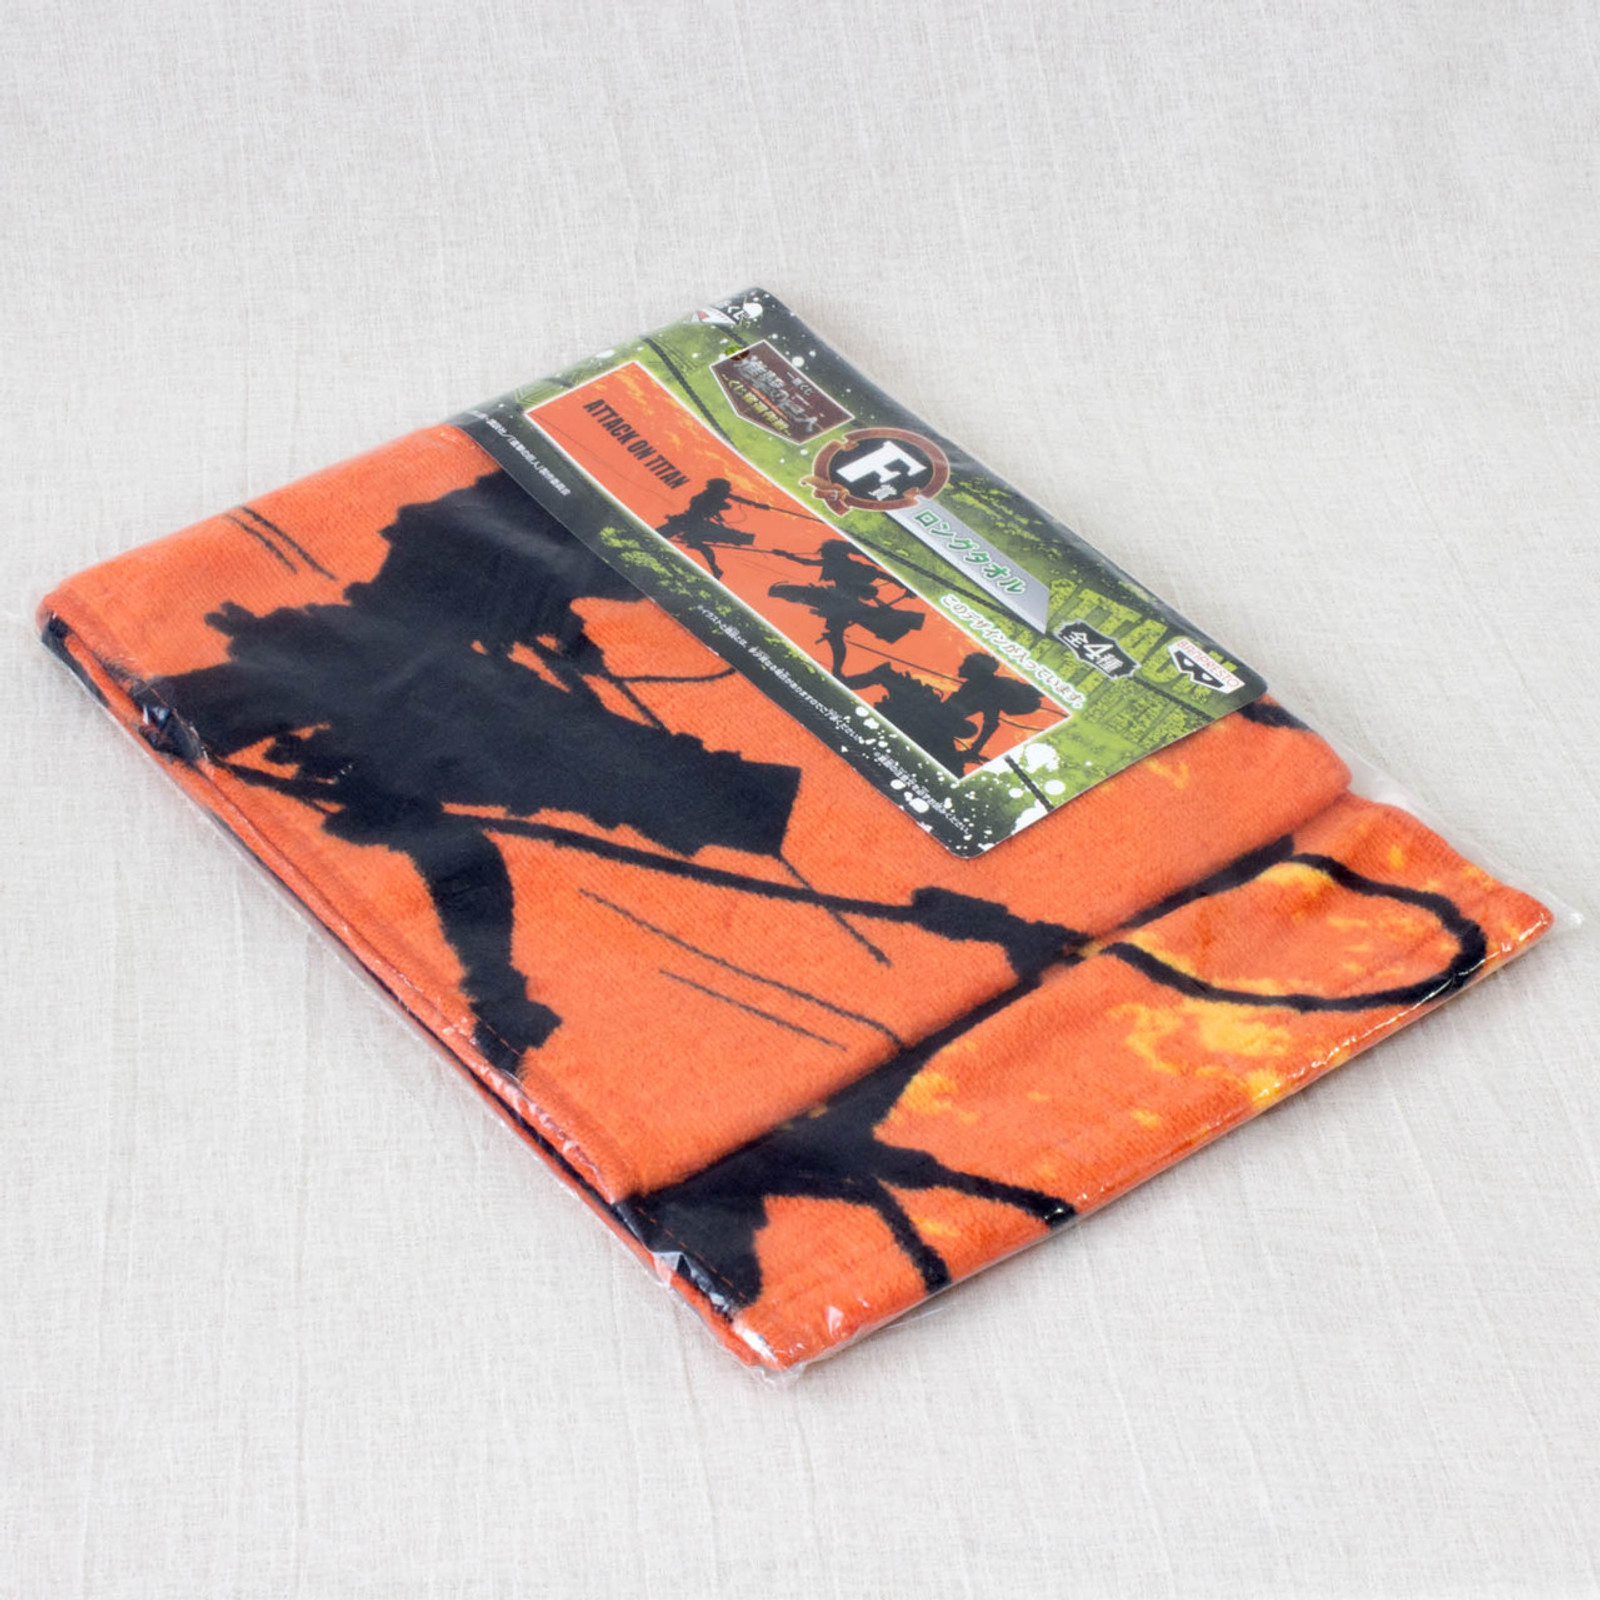 Attack on Titan Long Towel 40 inch Orange Banpresto JAPAN ANIME MANGA